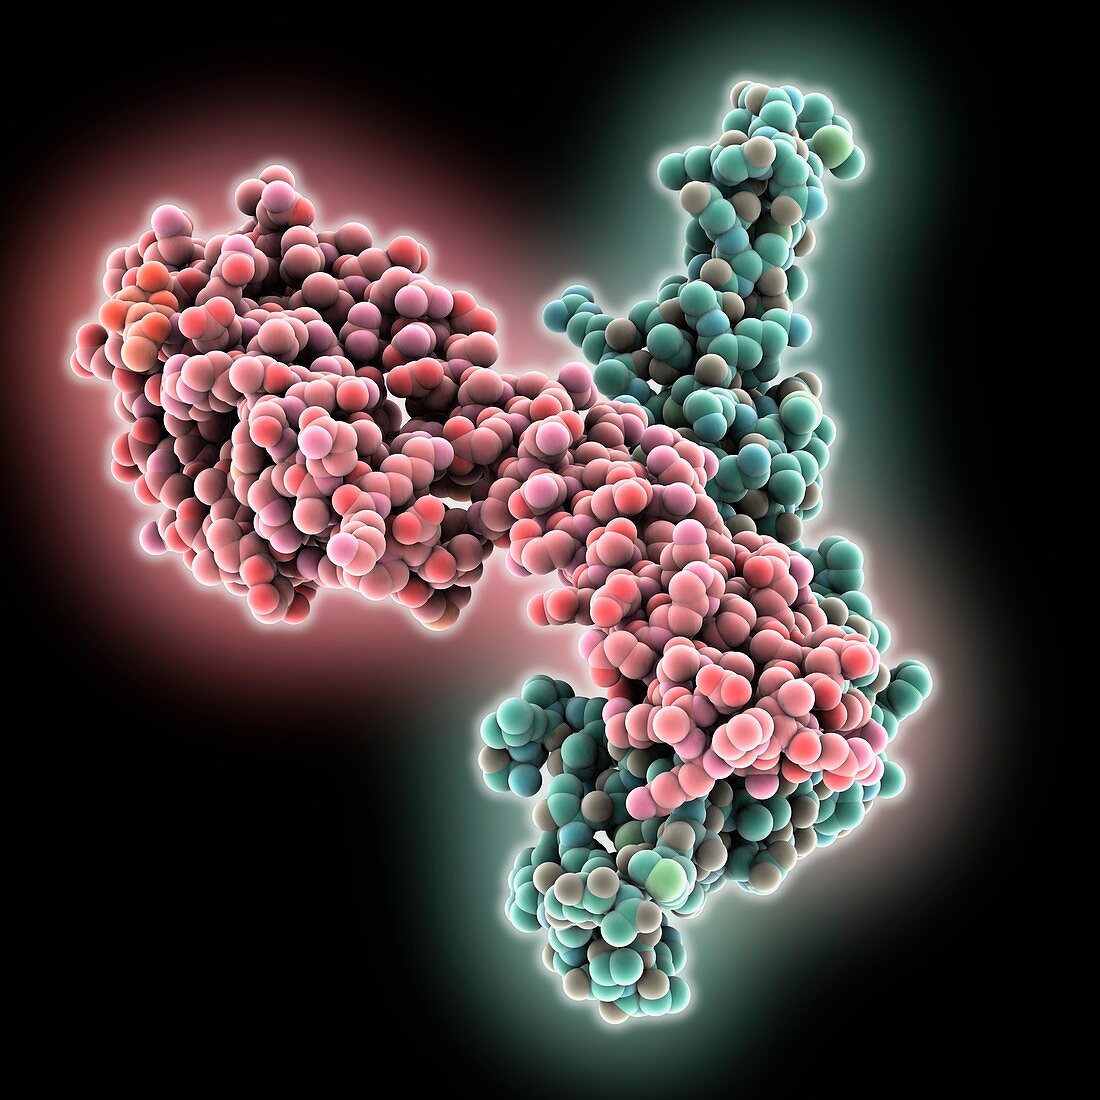 Amyloid precursor protein complex